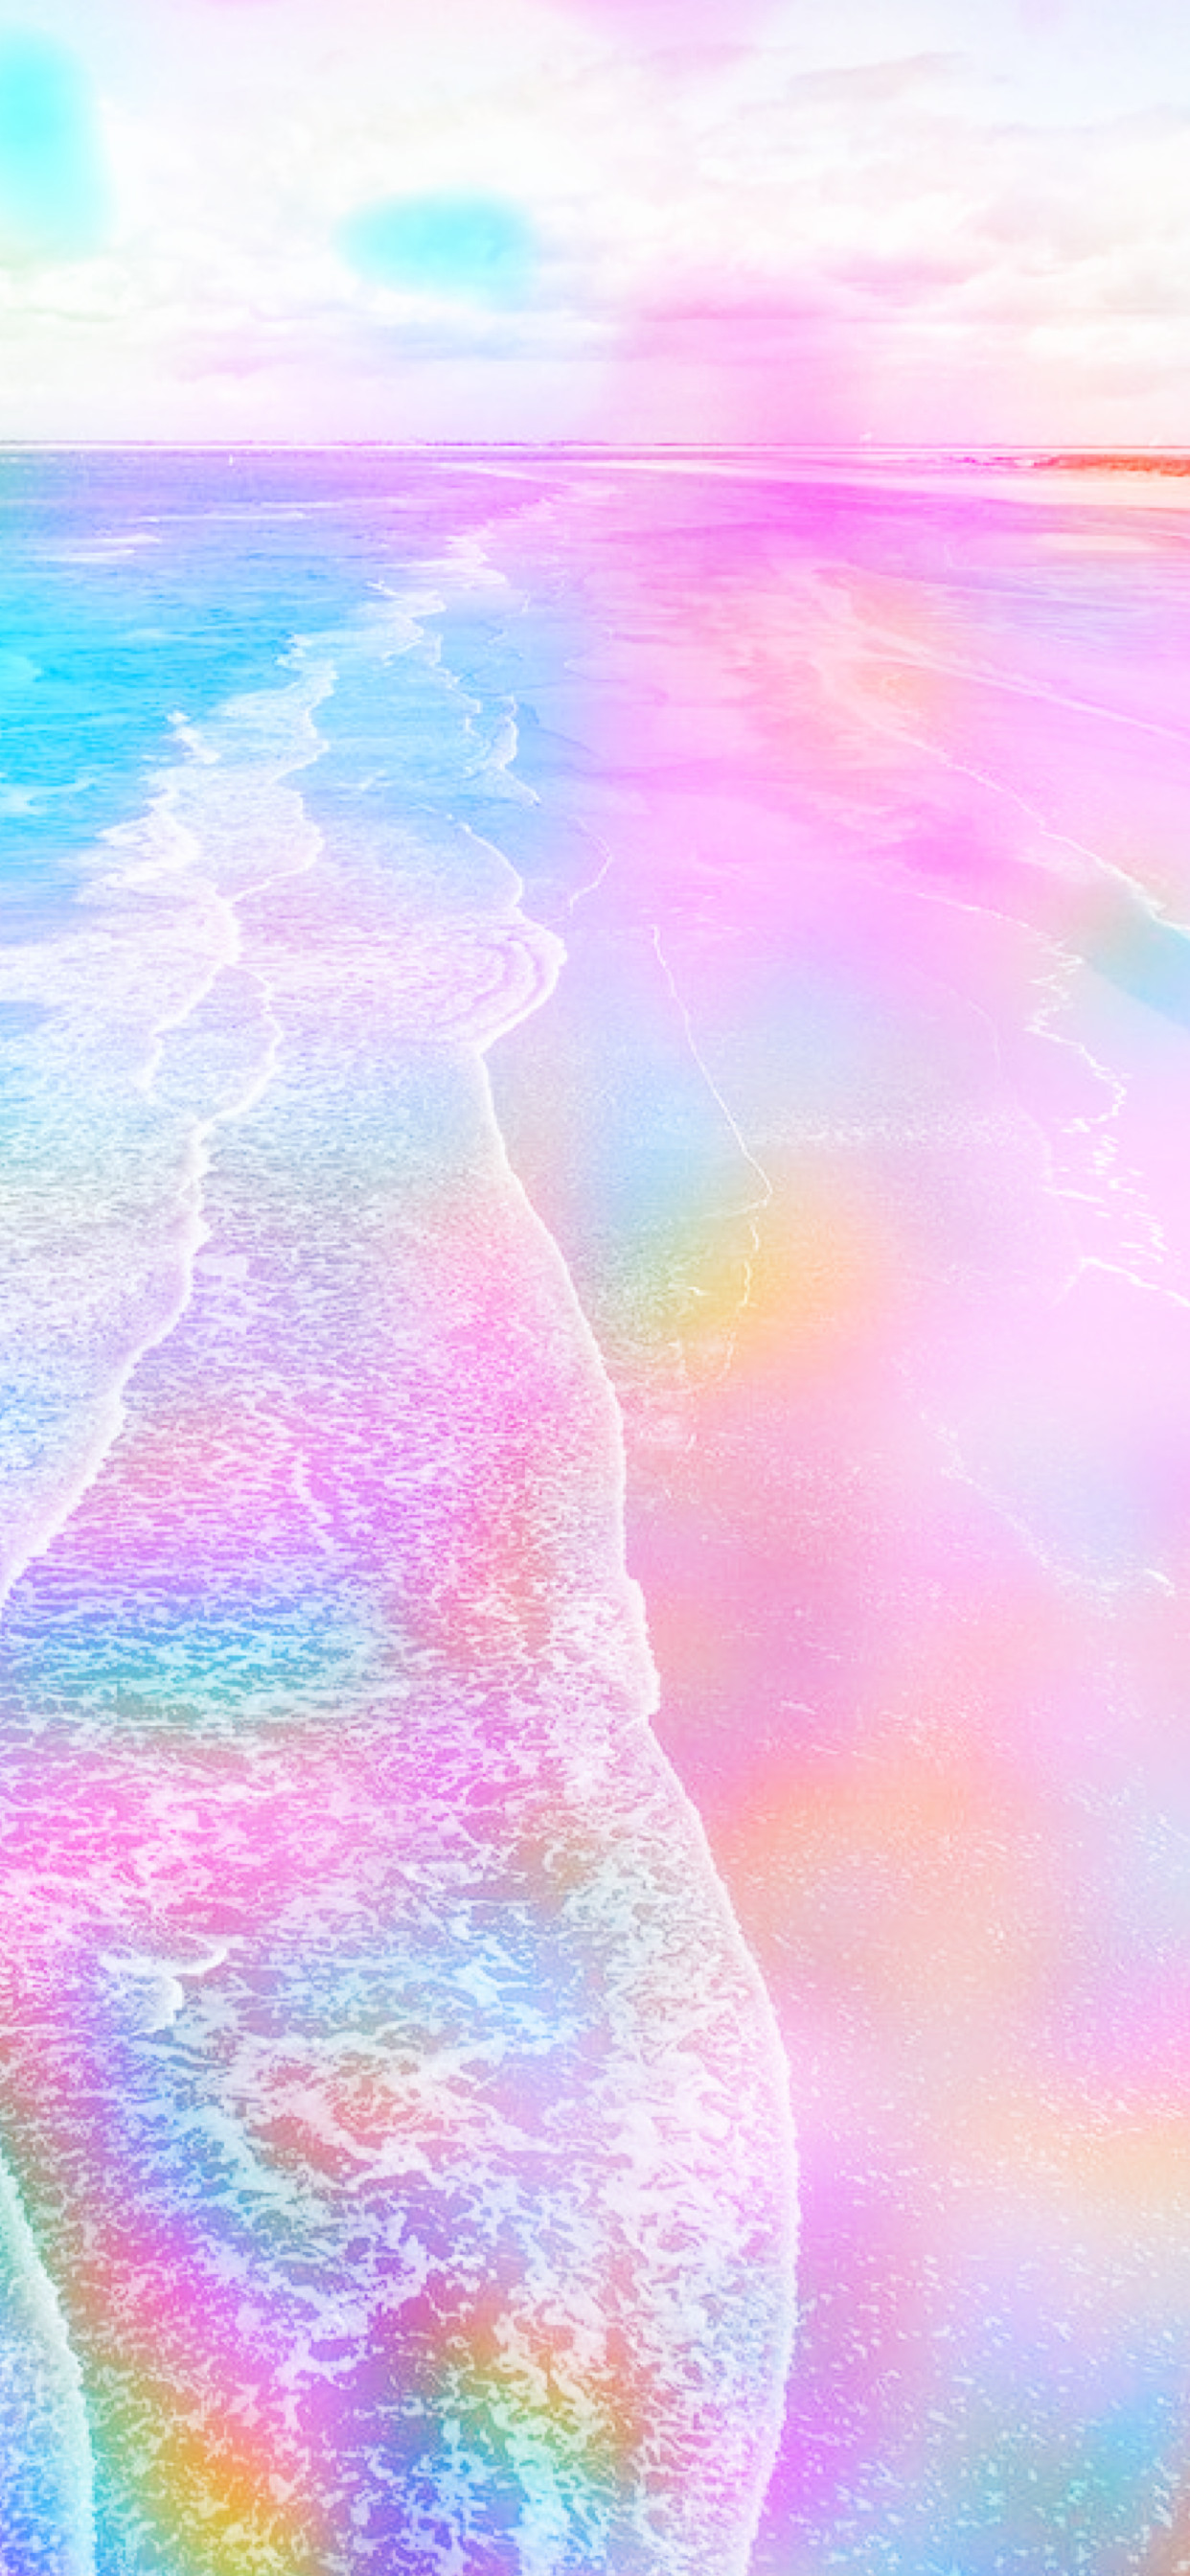 Beach Rainbow Wallpaper. วอลเปเปอร์, การถ่ายภาพธรรมชาติ, วอลเปเปอร์ดิสนีย์